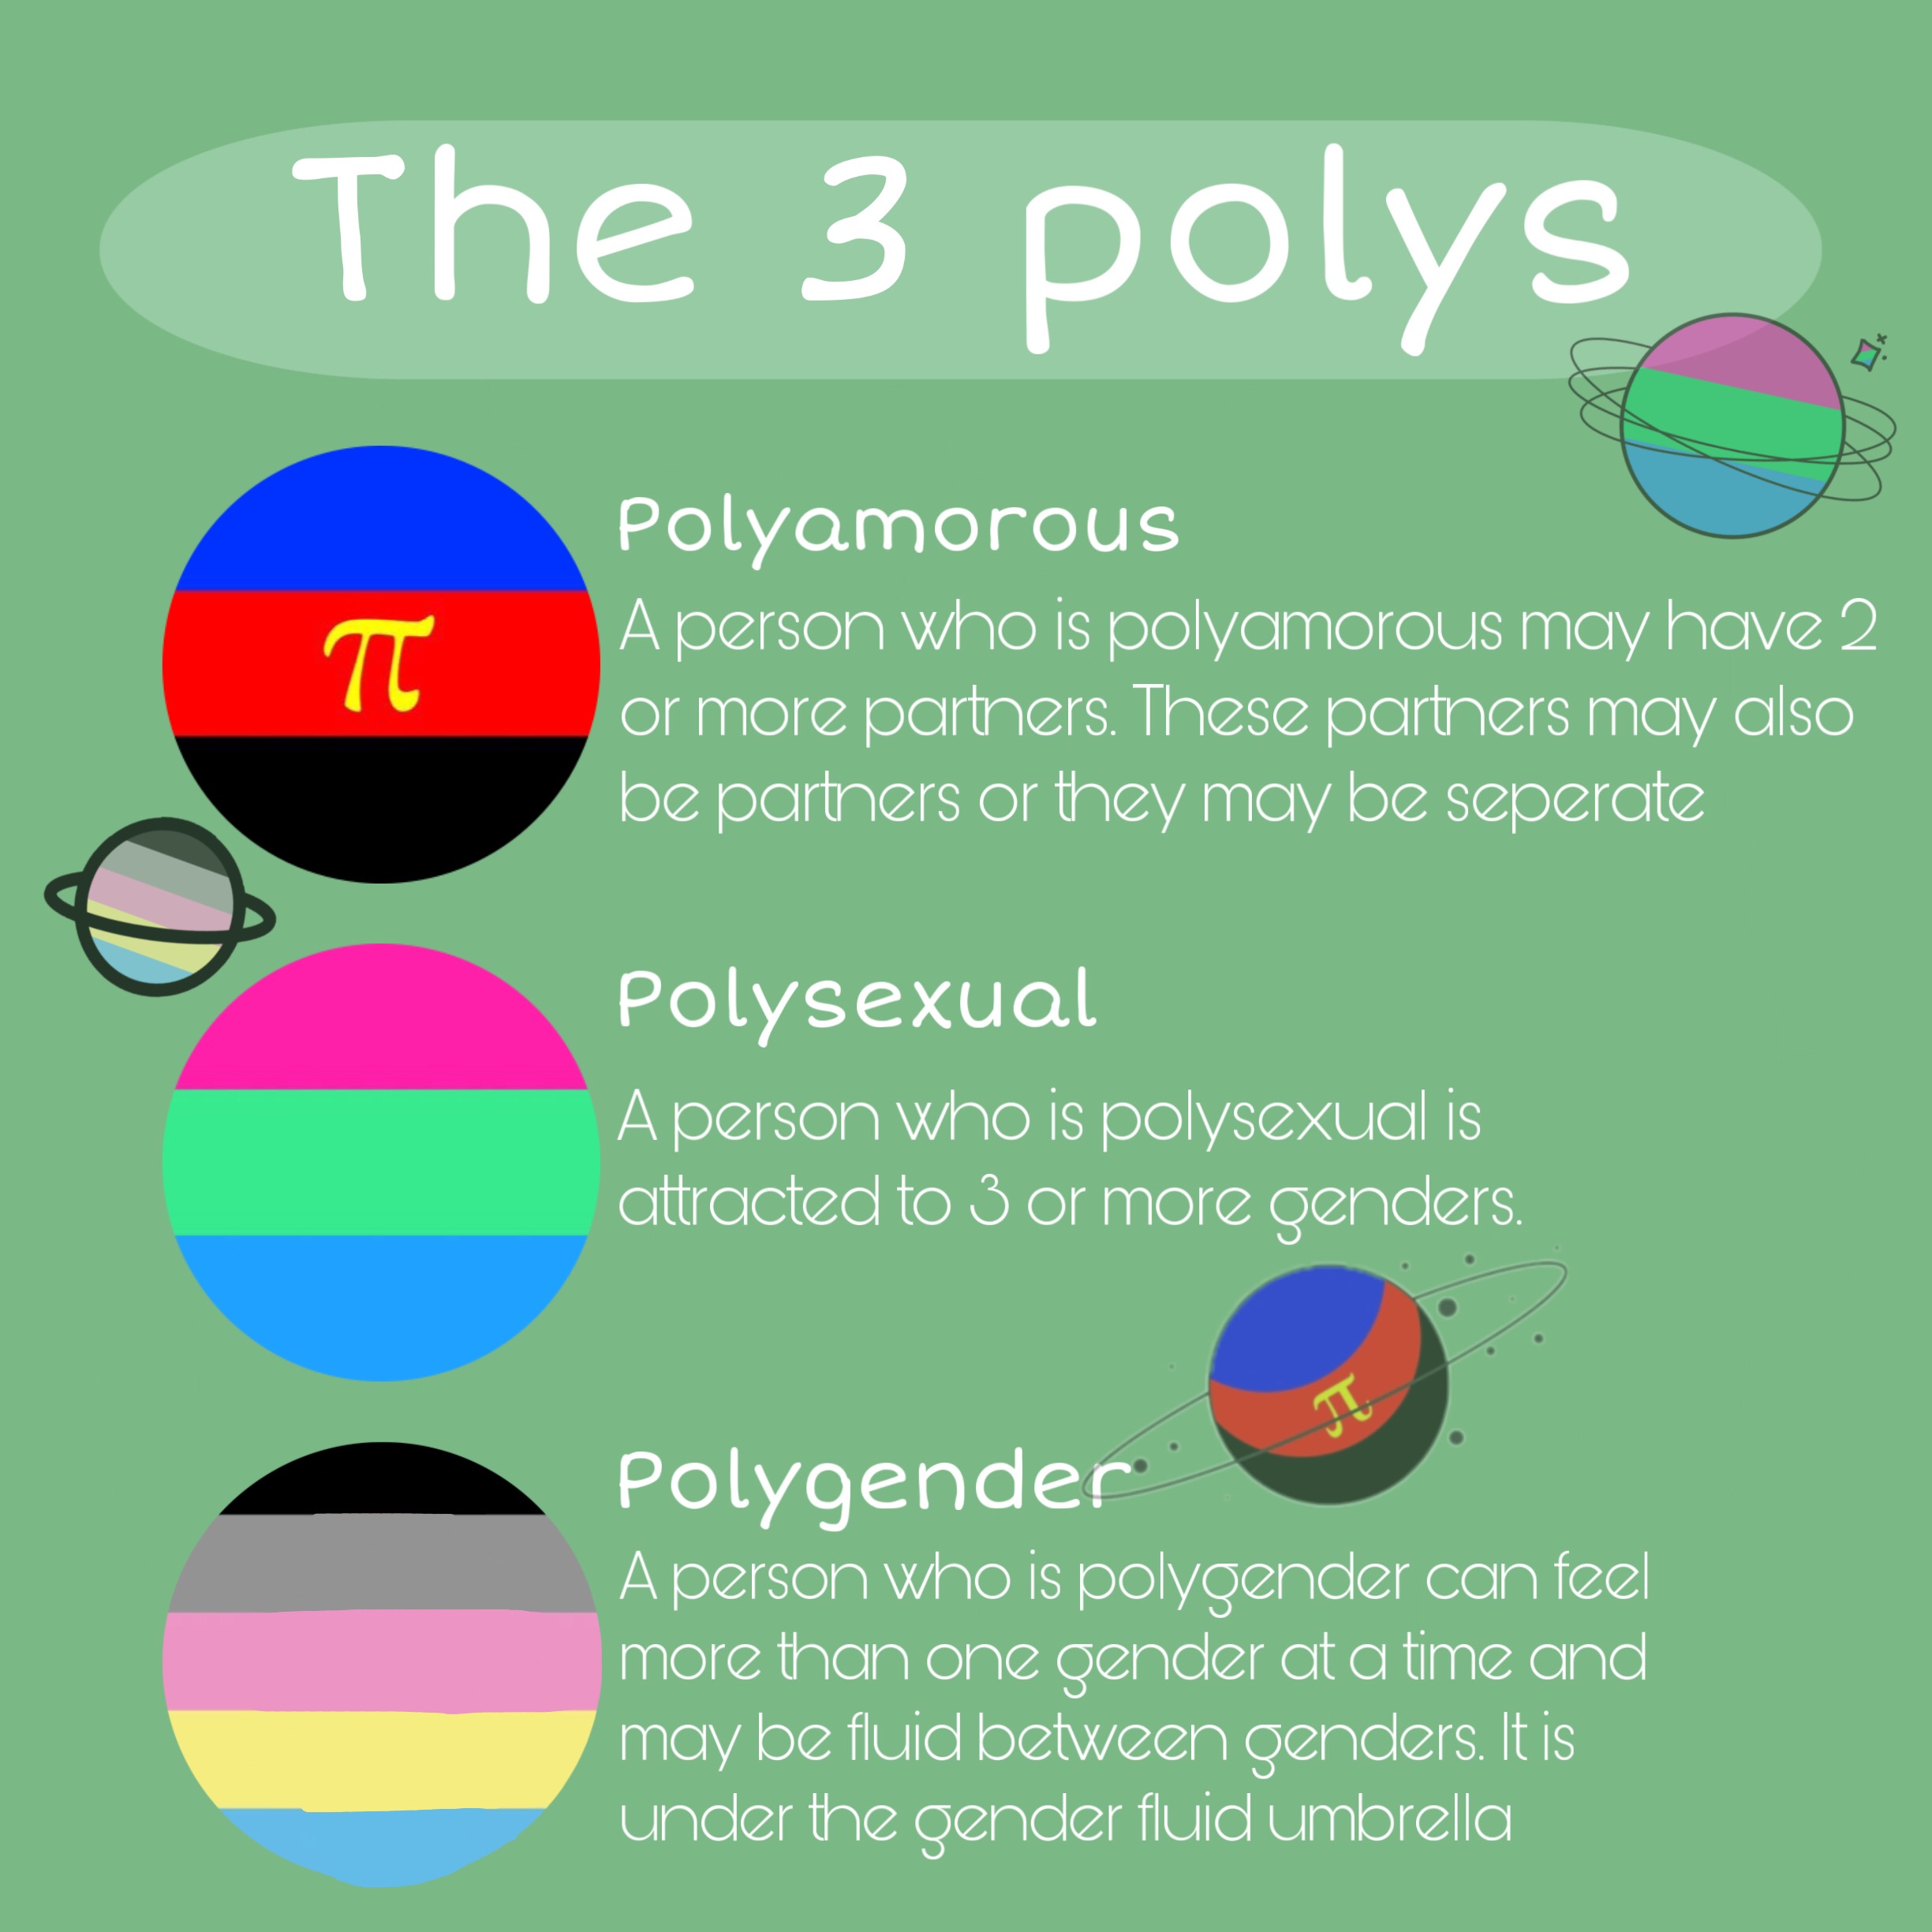 Polysexual